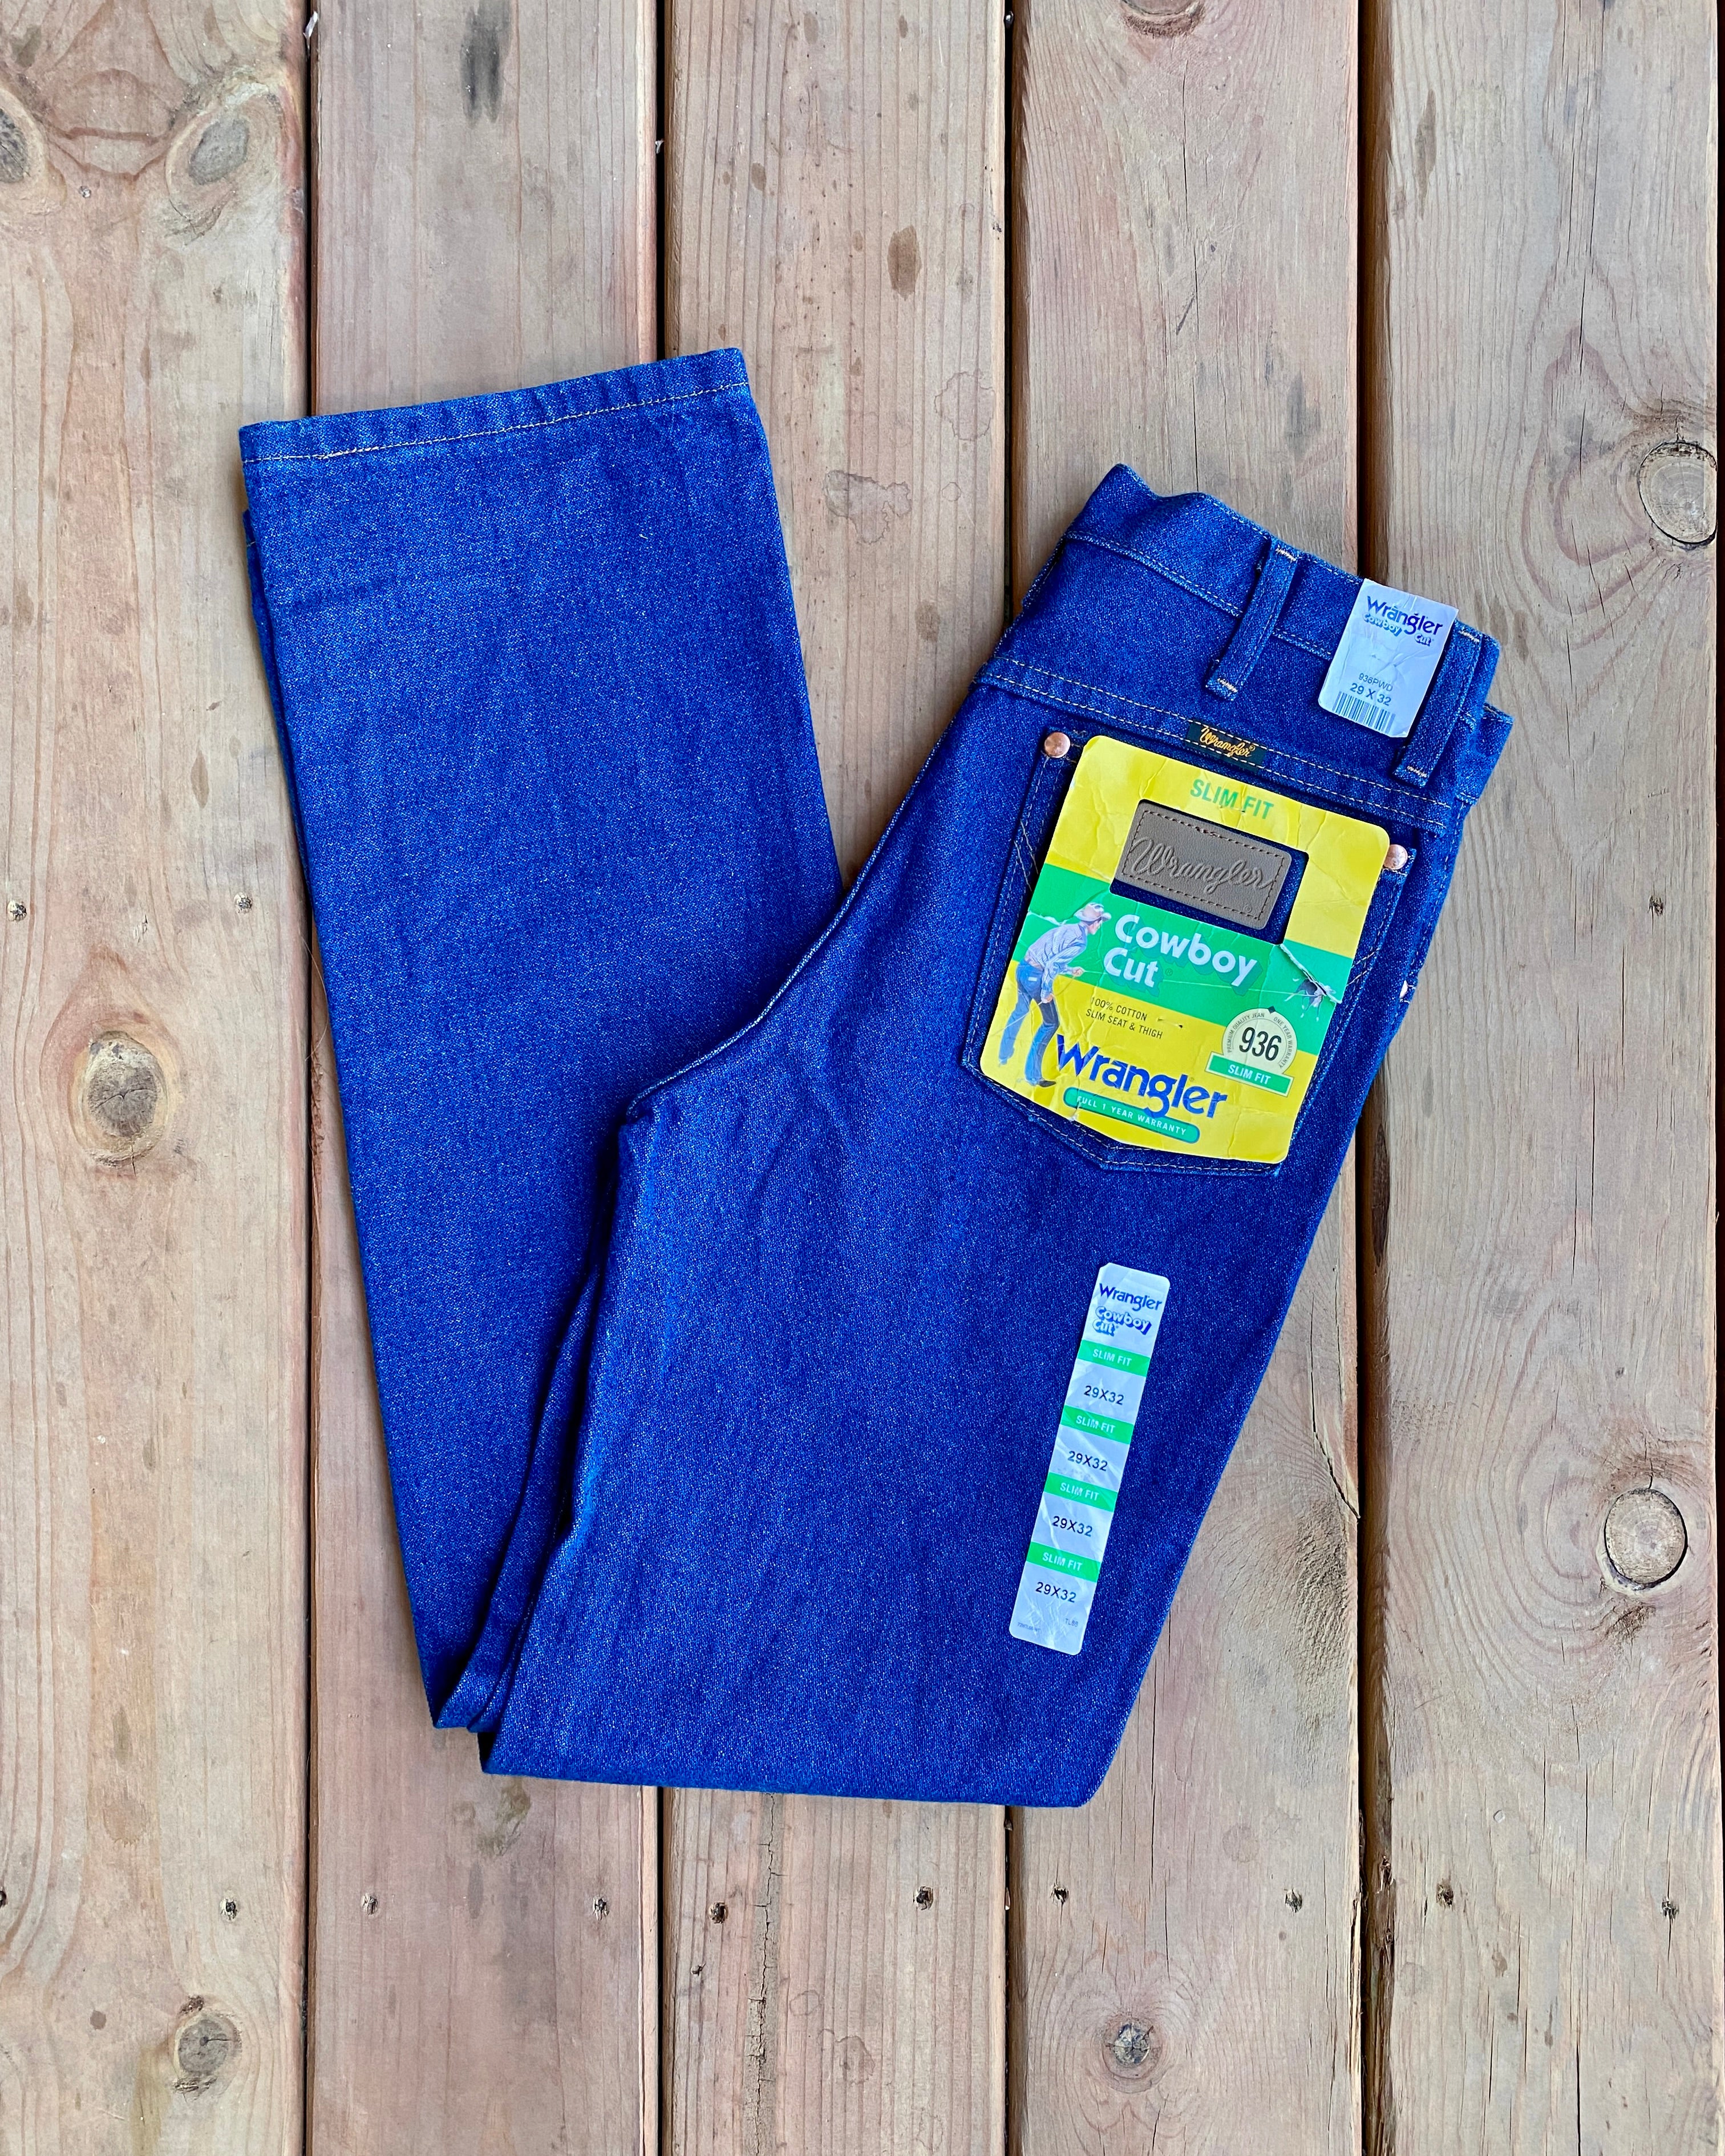 Vintage 1990s Deadstock Cowboy Cut Wrangler Raw Dark Blue Wash Jeans size 29